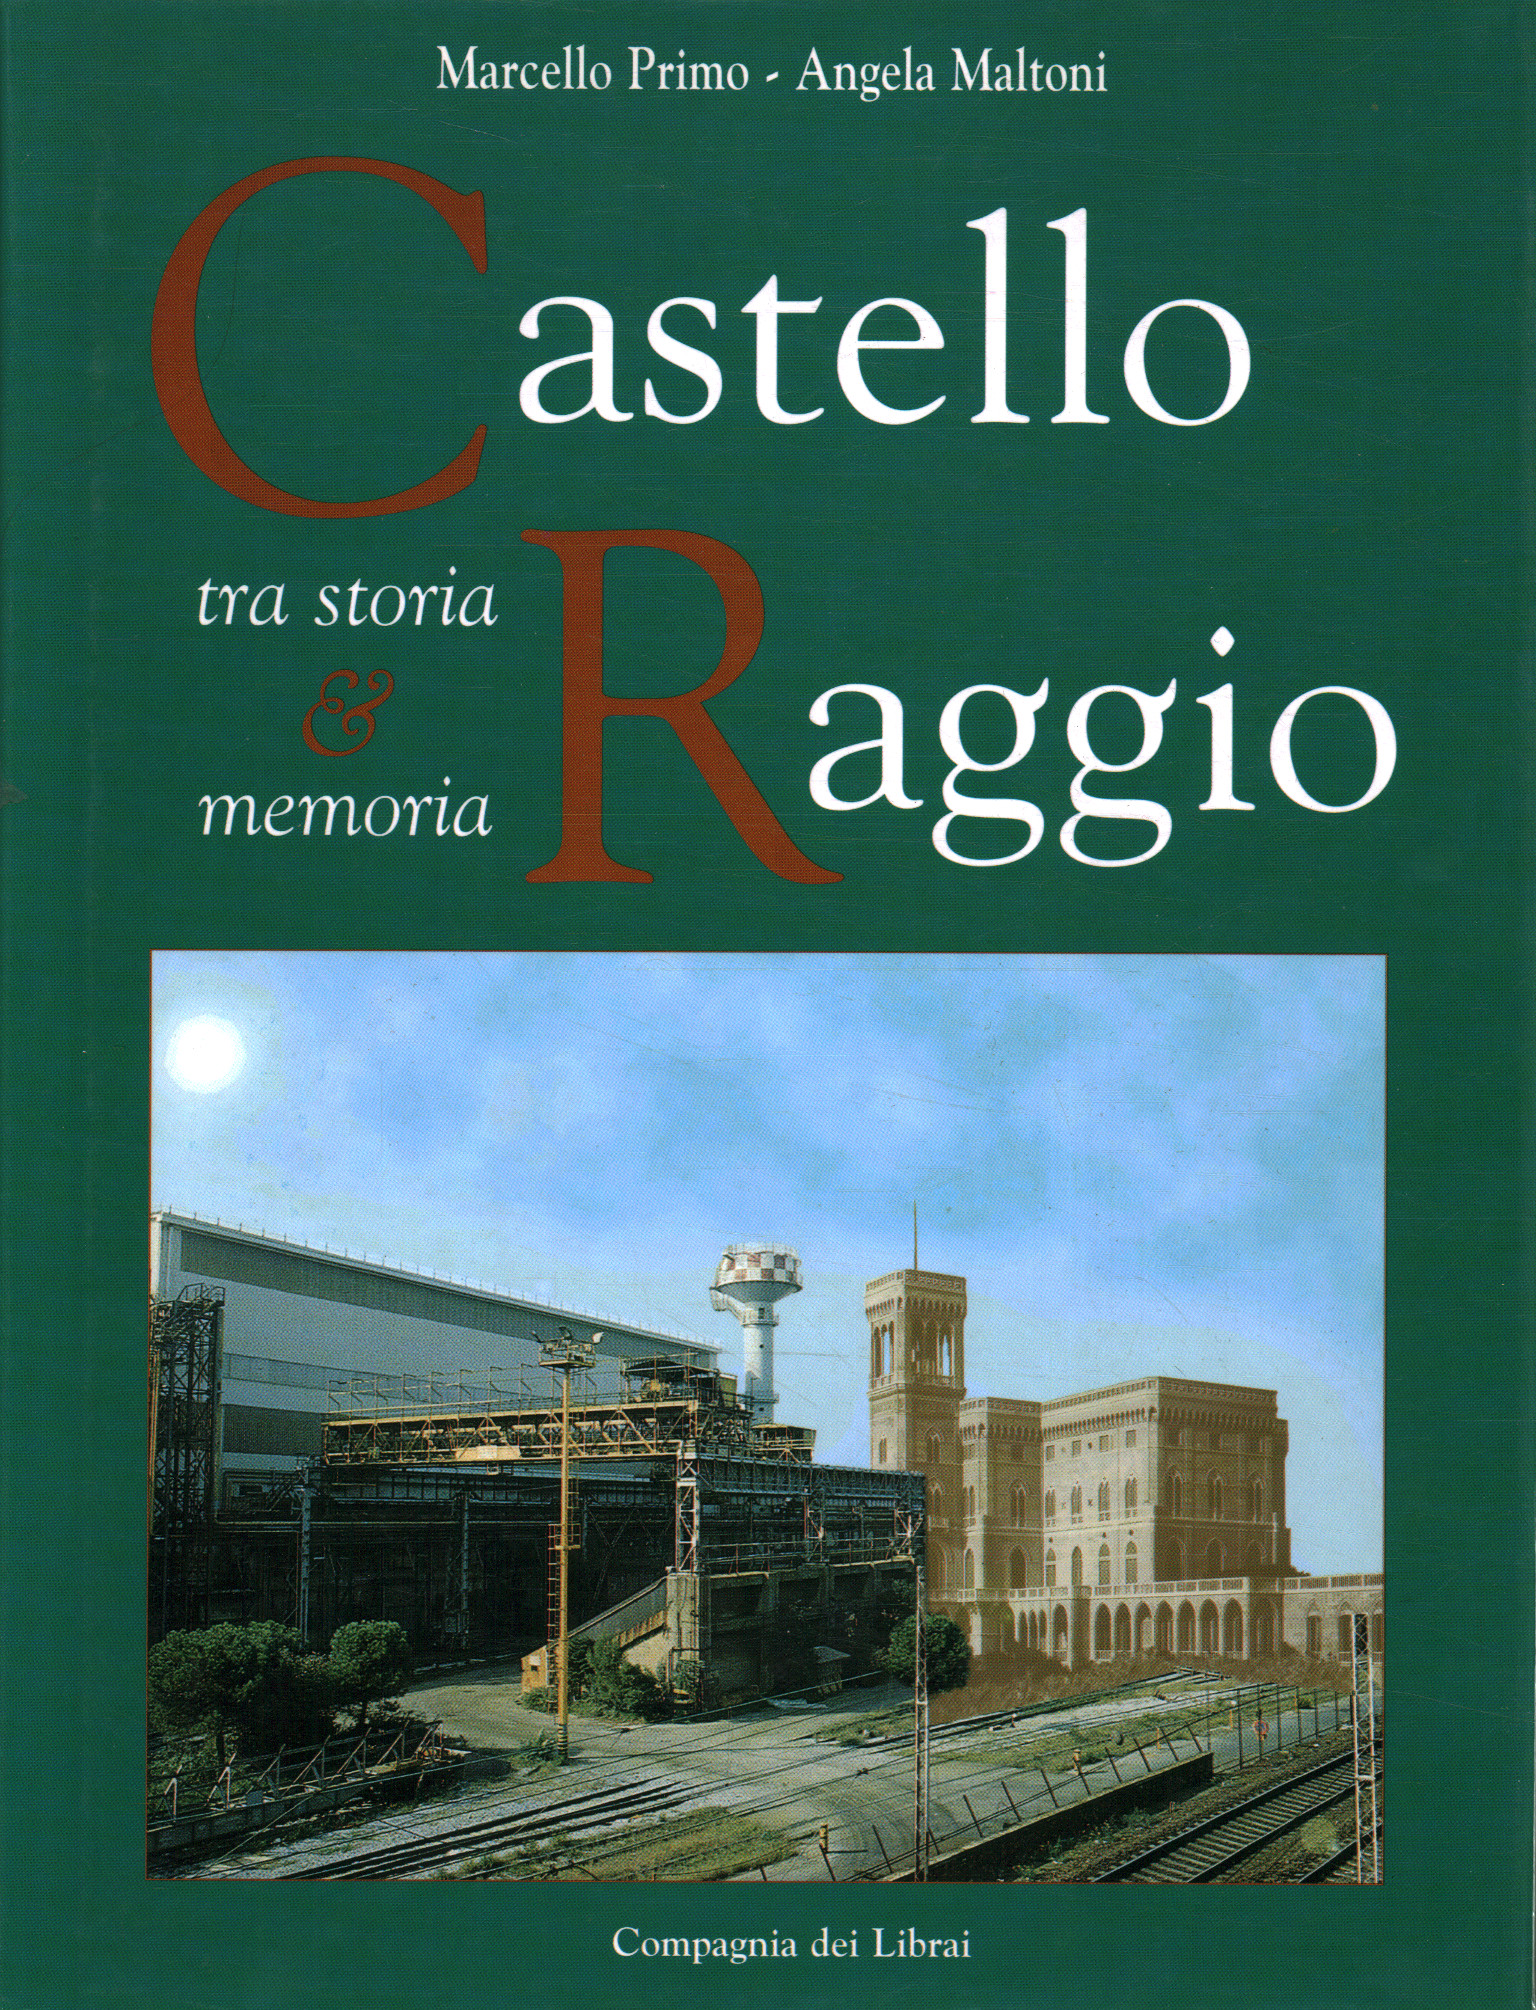 Castello Raggio entre histoire et mémoire